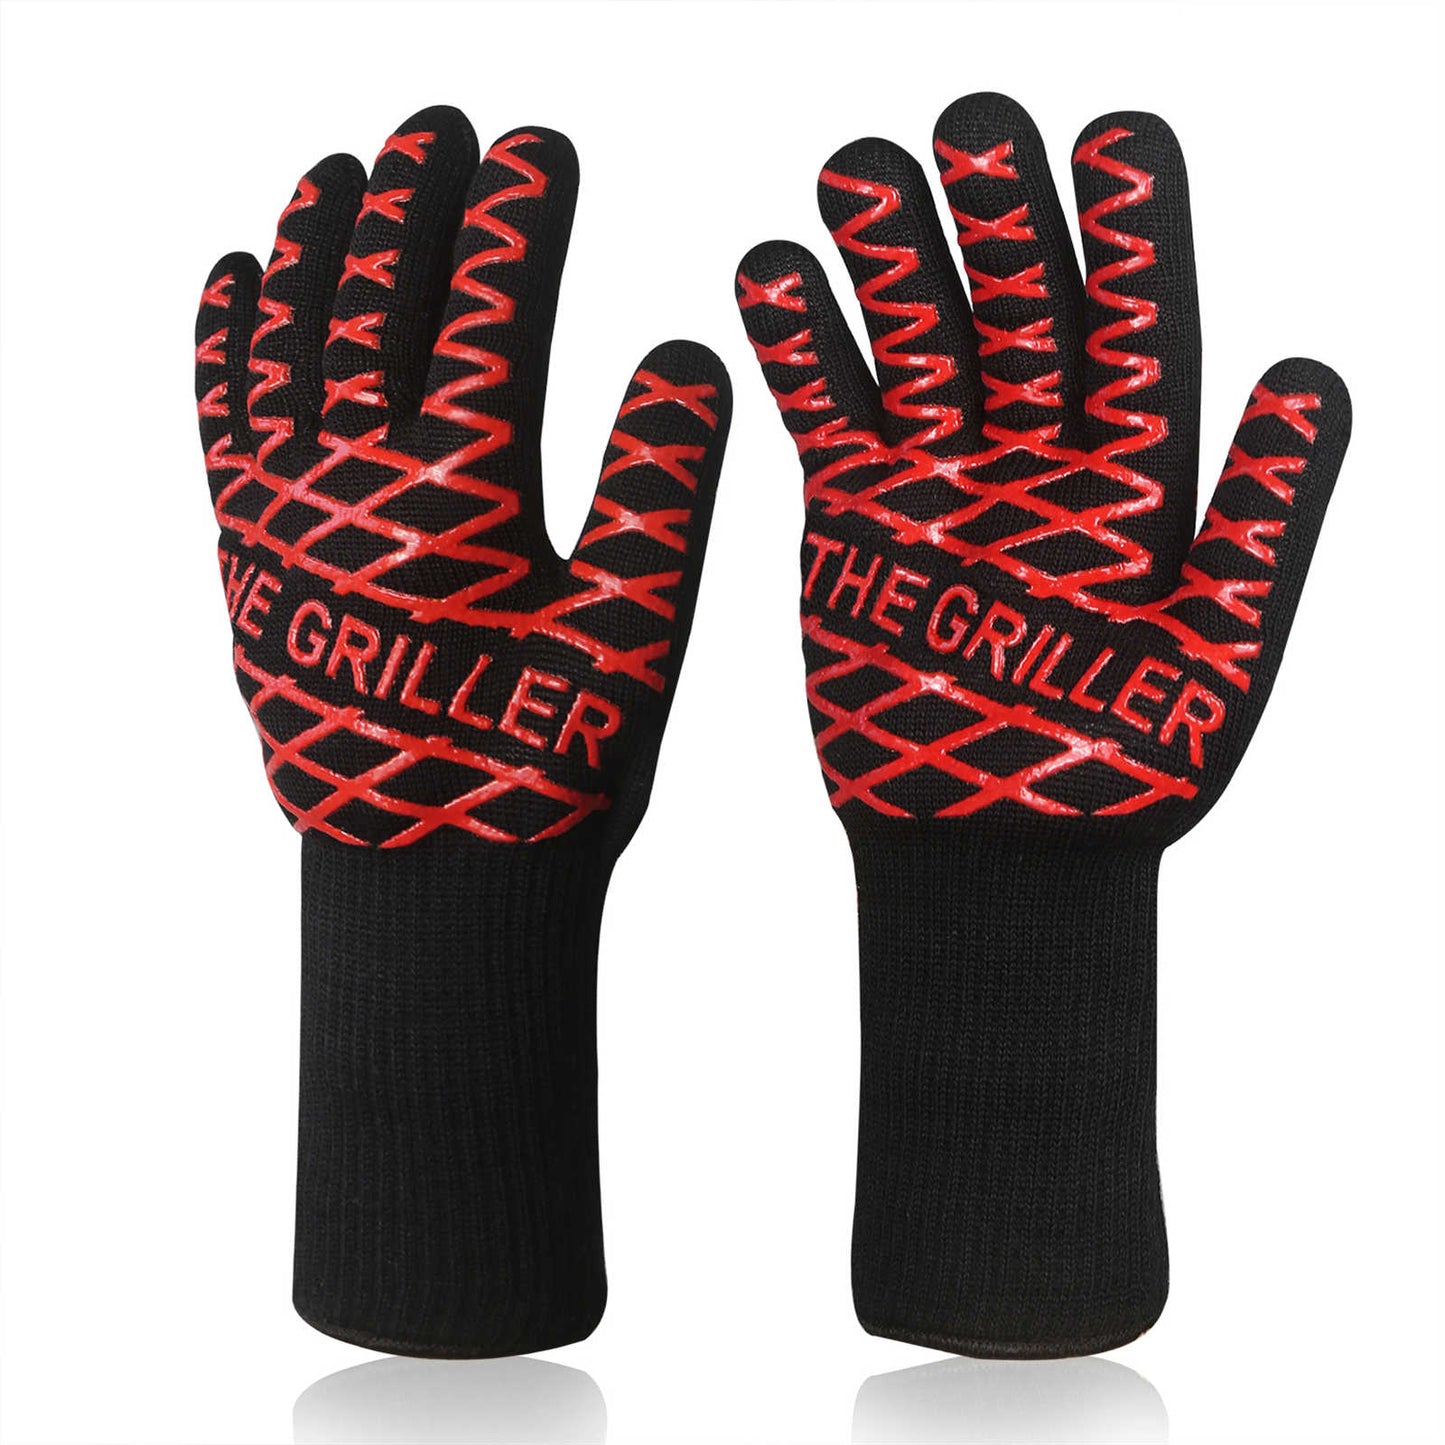 EvridWear 1 Pair The Griller BBQ Gloves